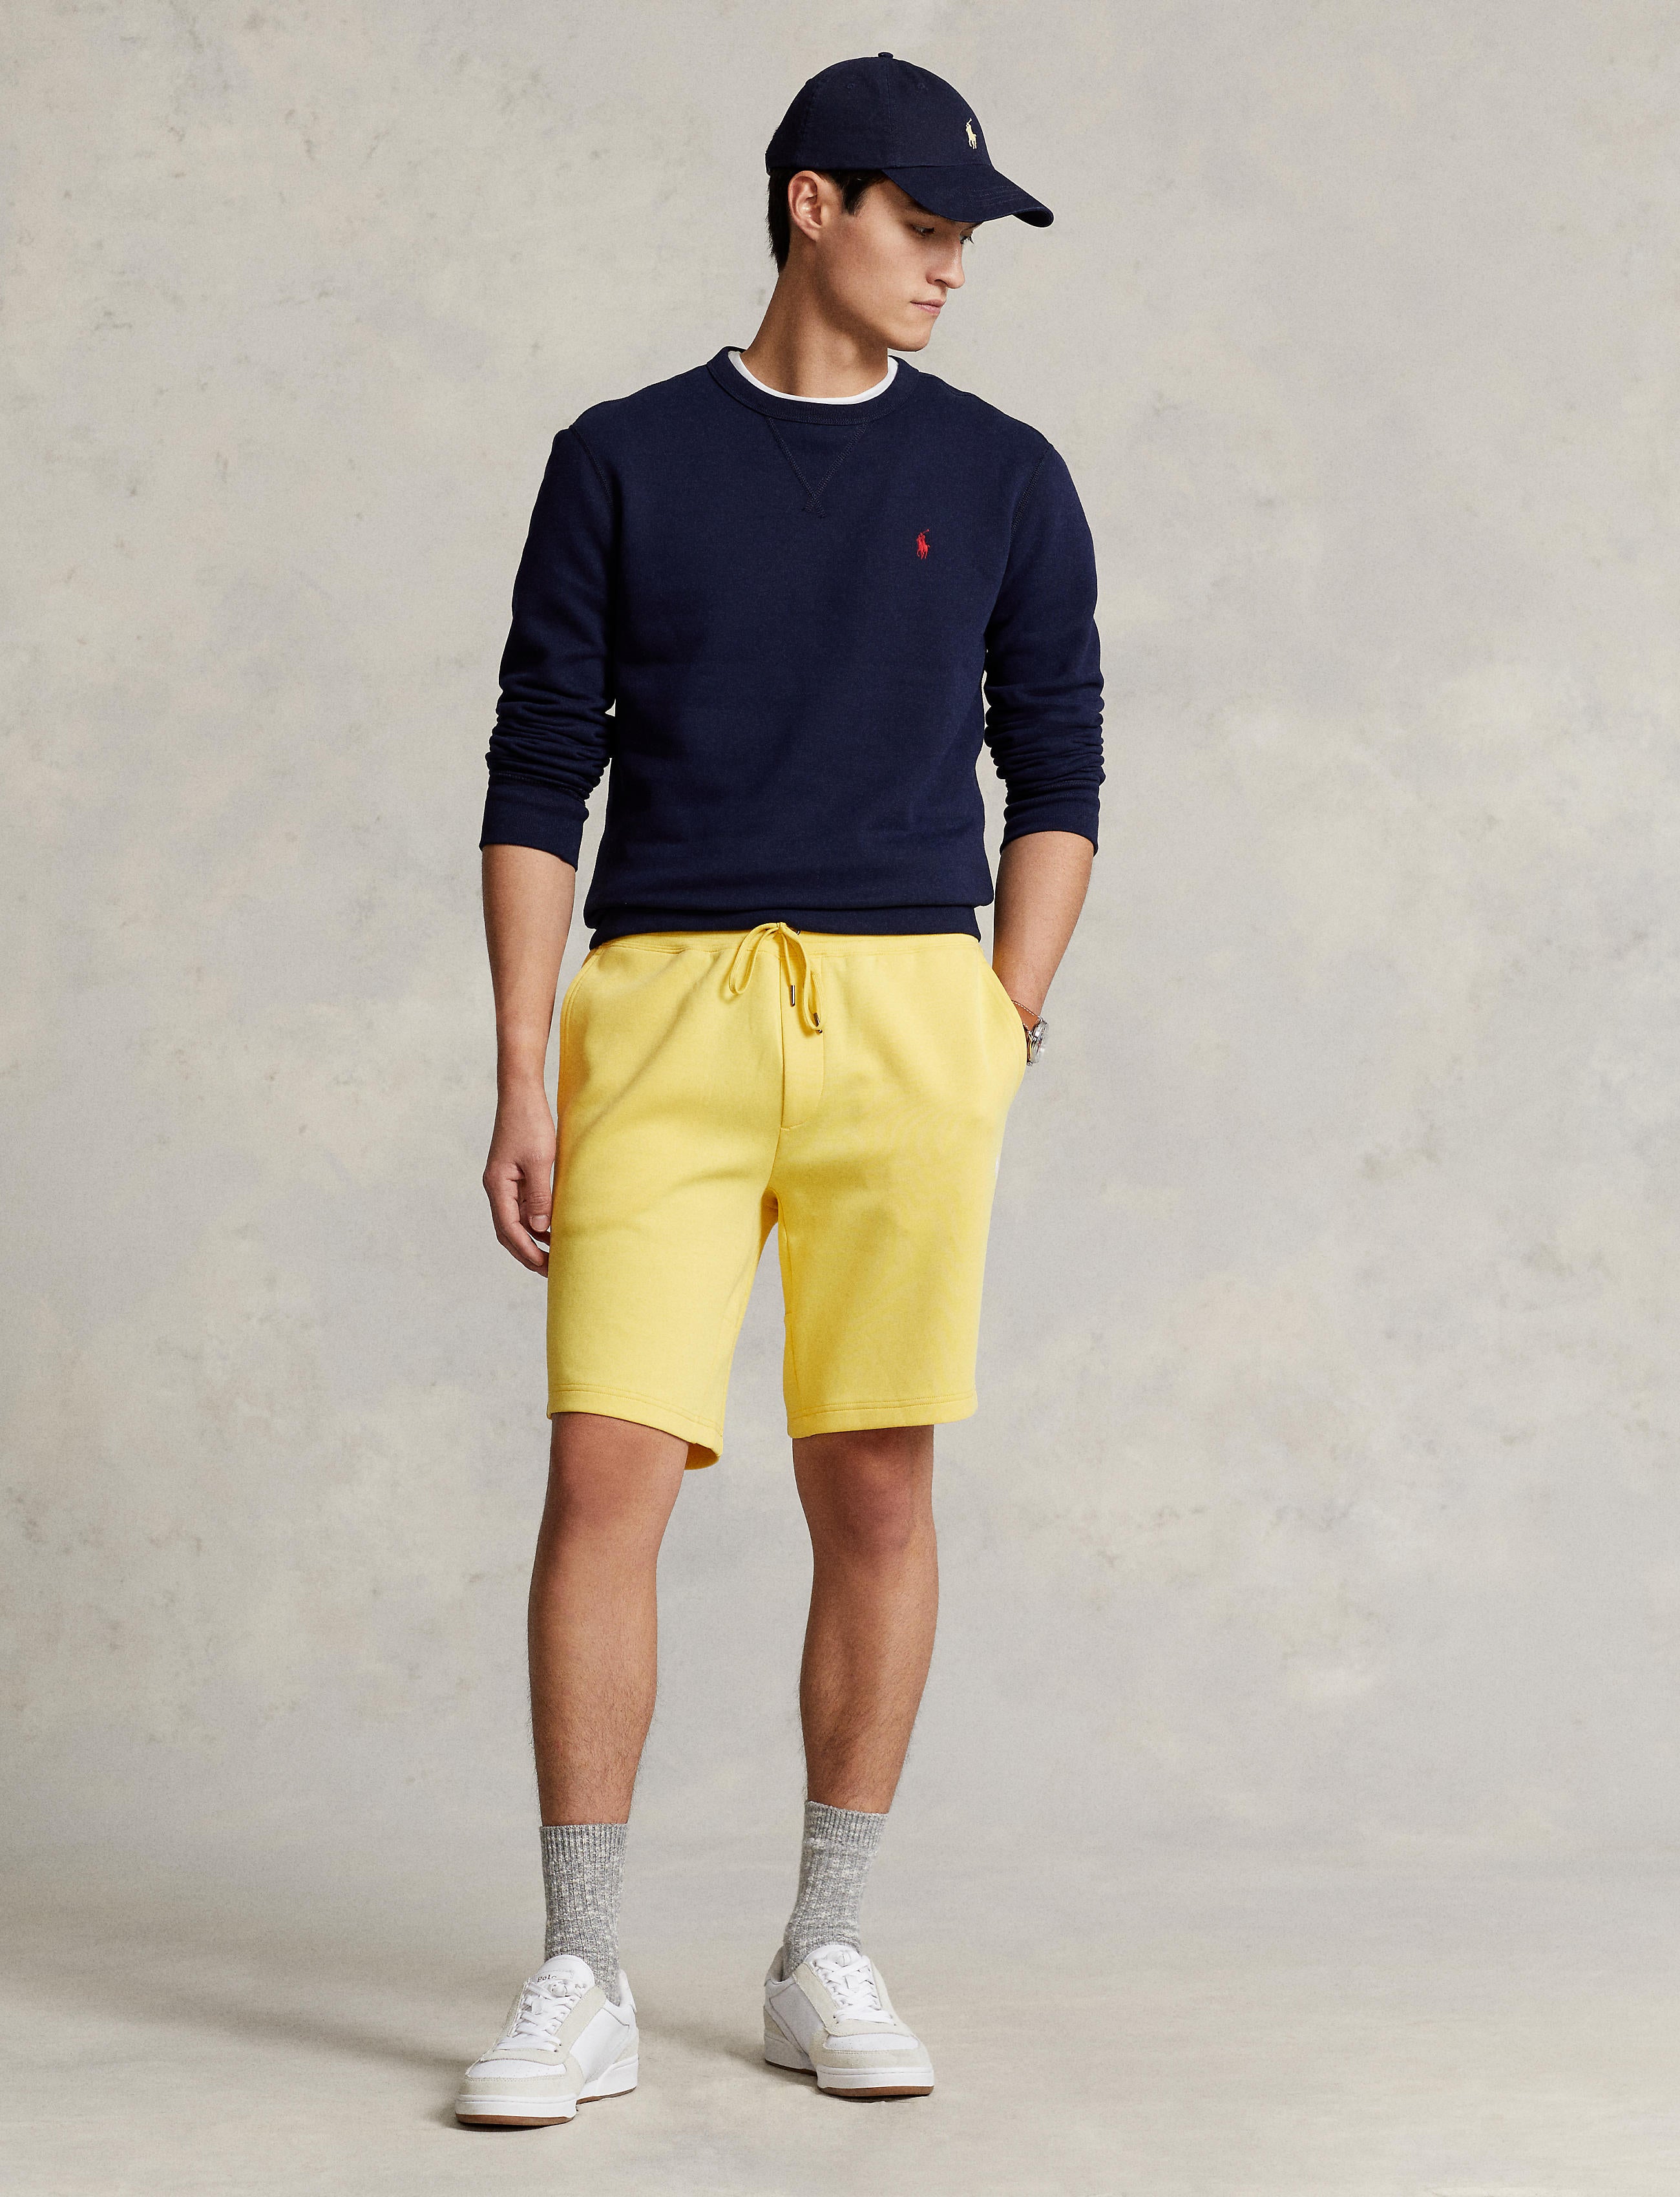 Polo Ralph Lauren Fleece Shorts - Classics - Yellow